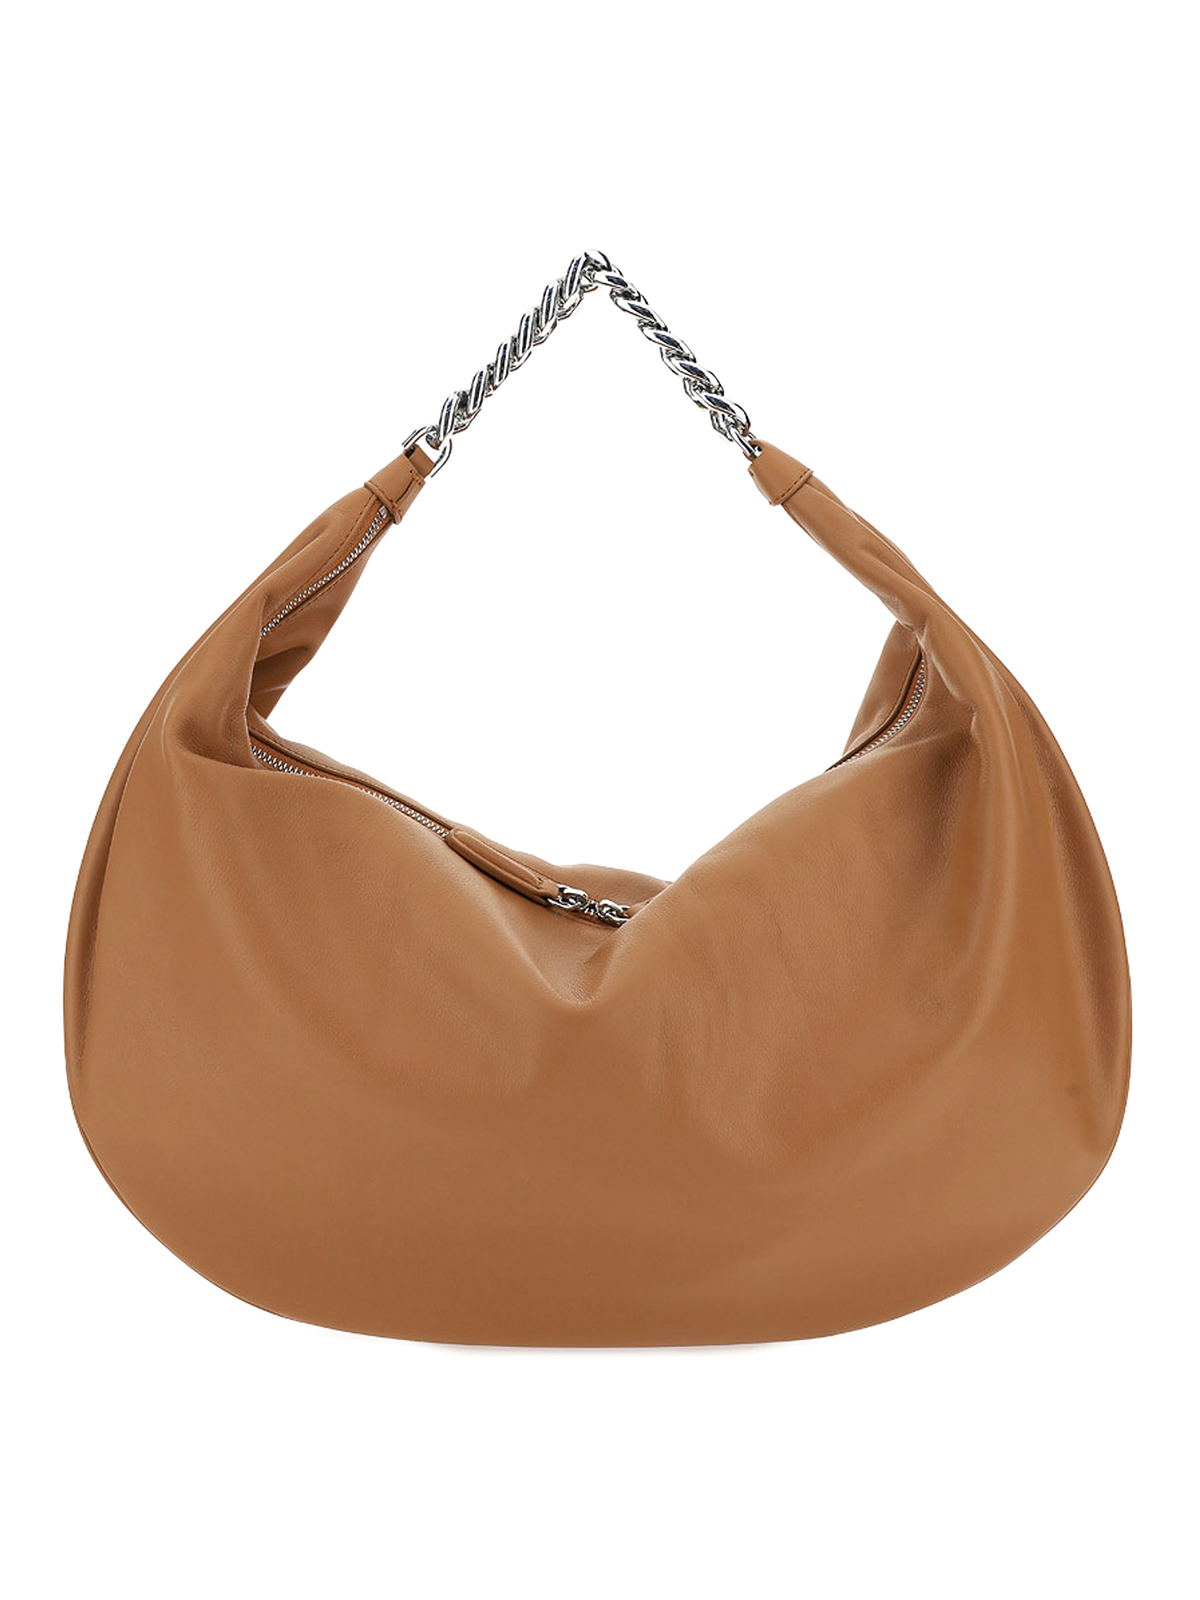 Staud Sasha Leather Shoulder Bag on SALE